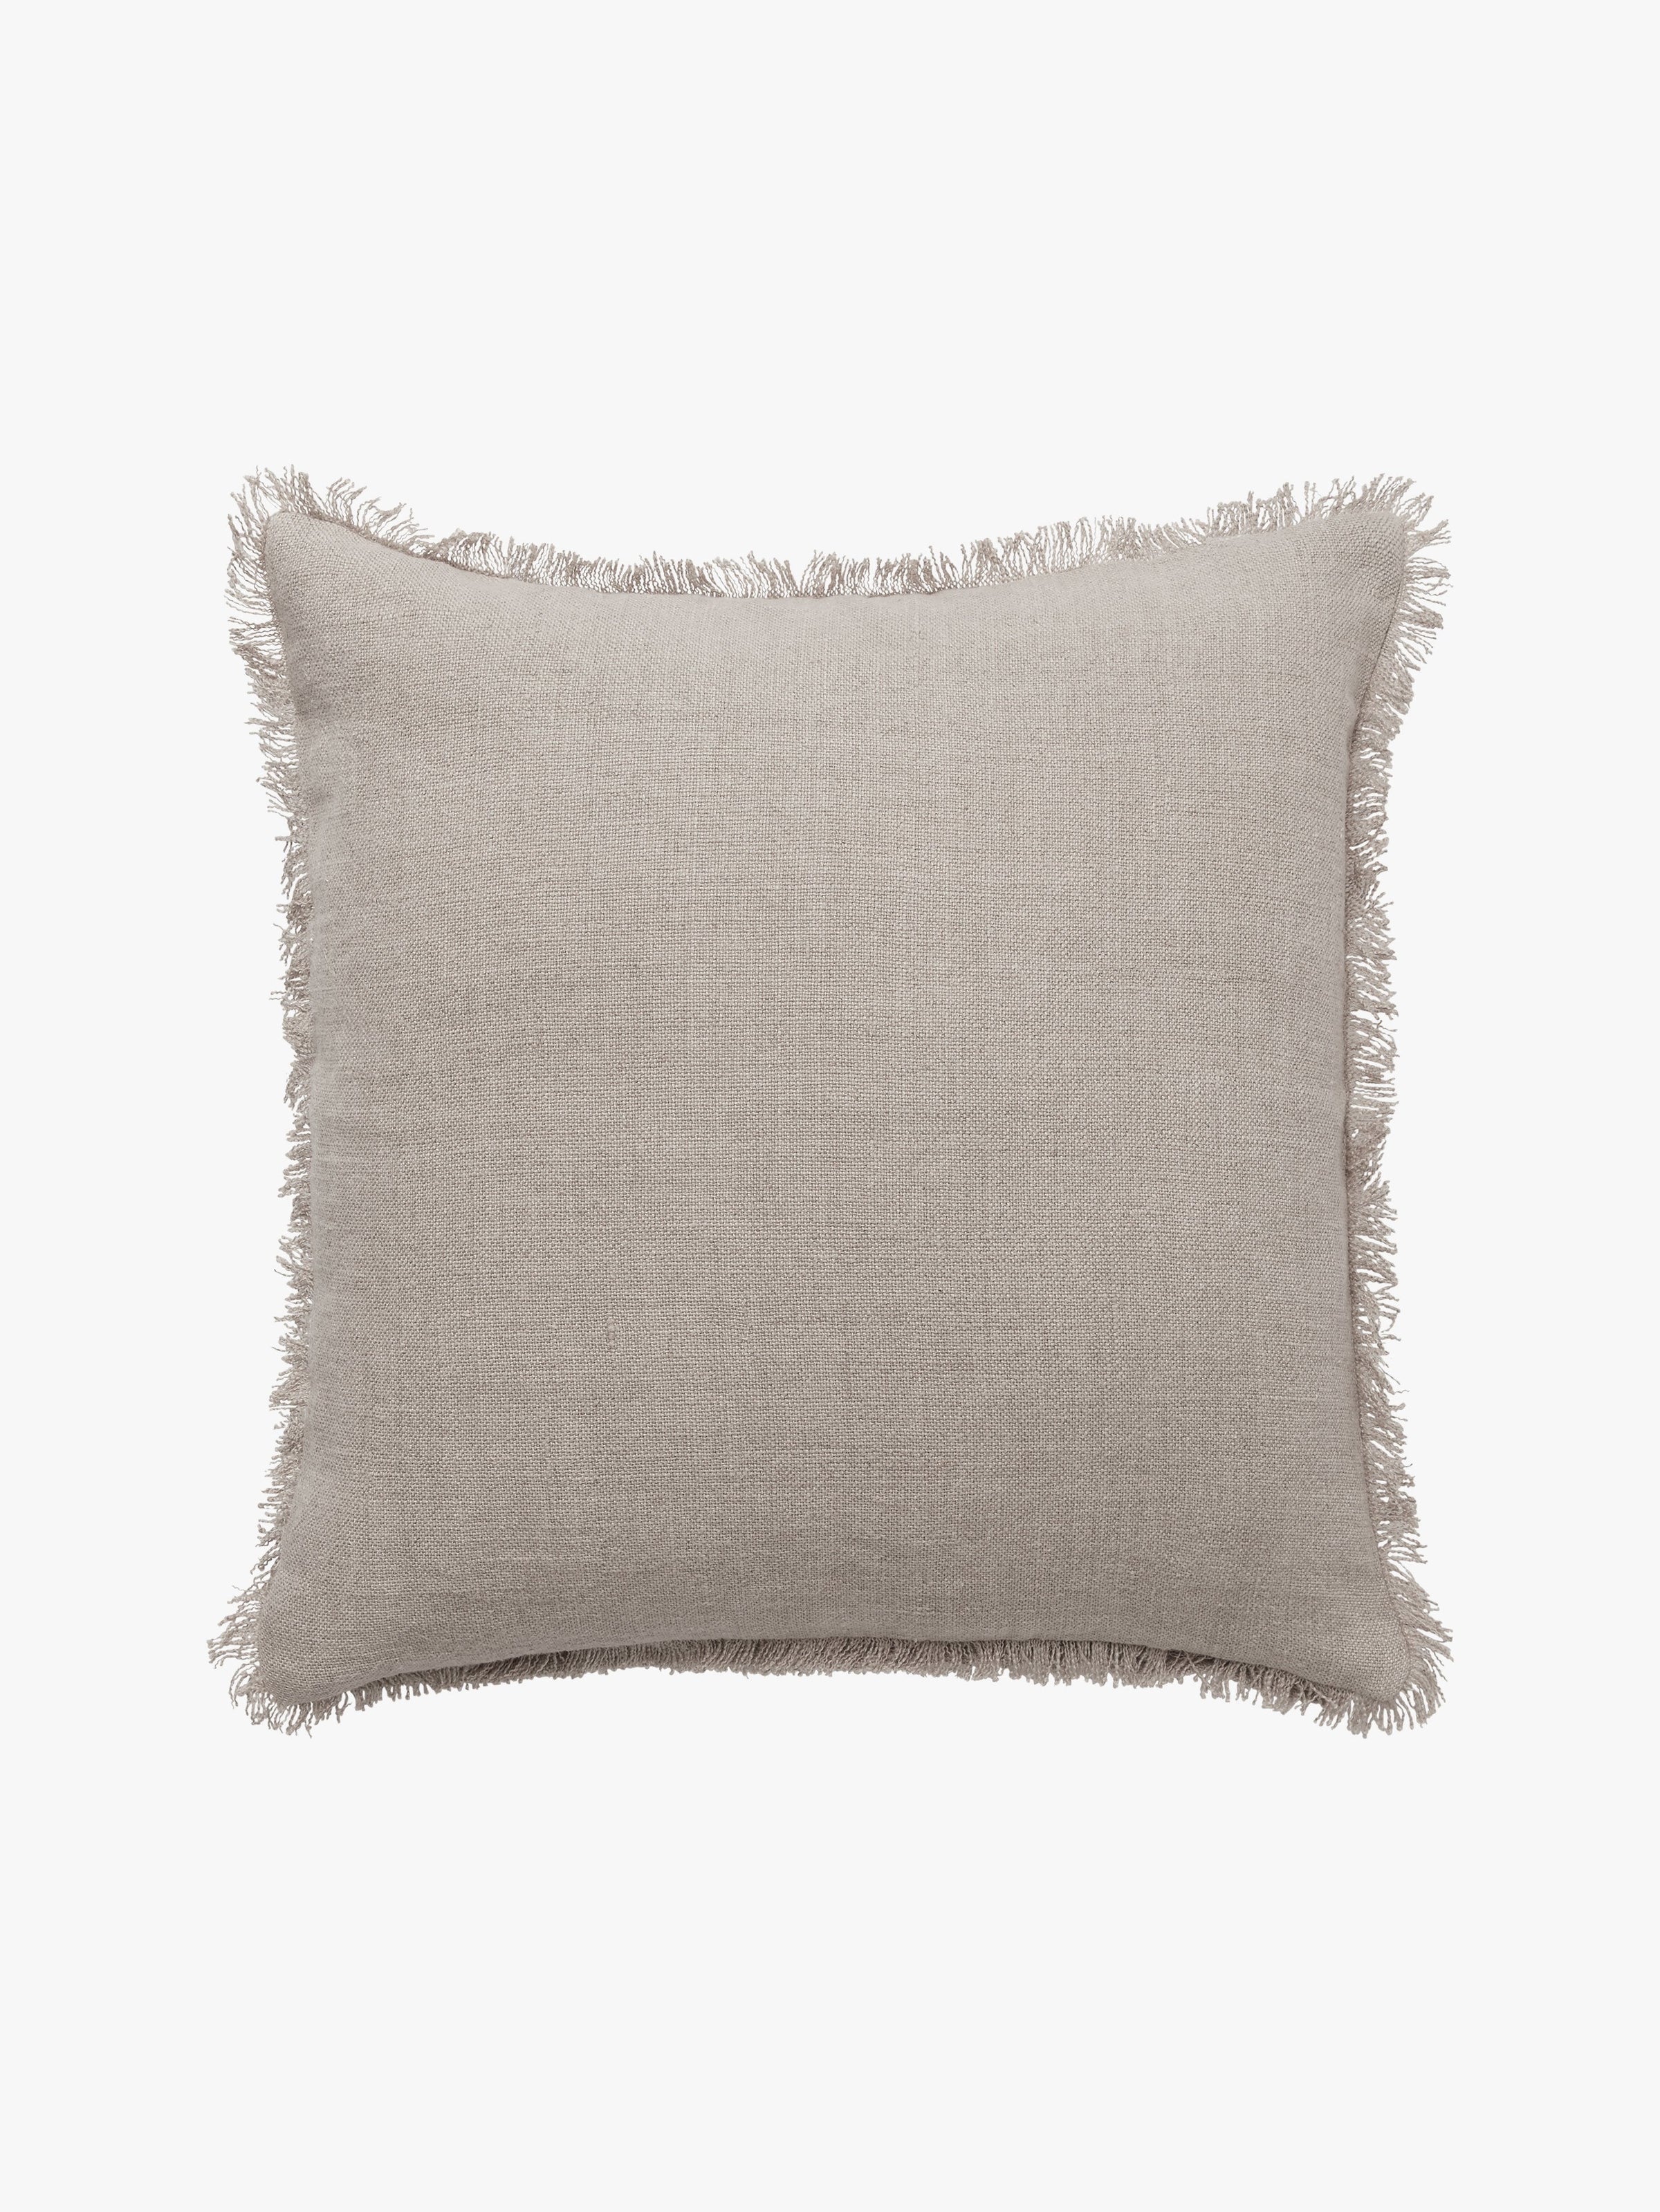 Burton Oatmeal Cushion | 50 x 50cm